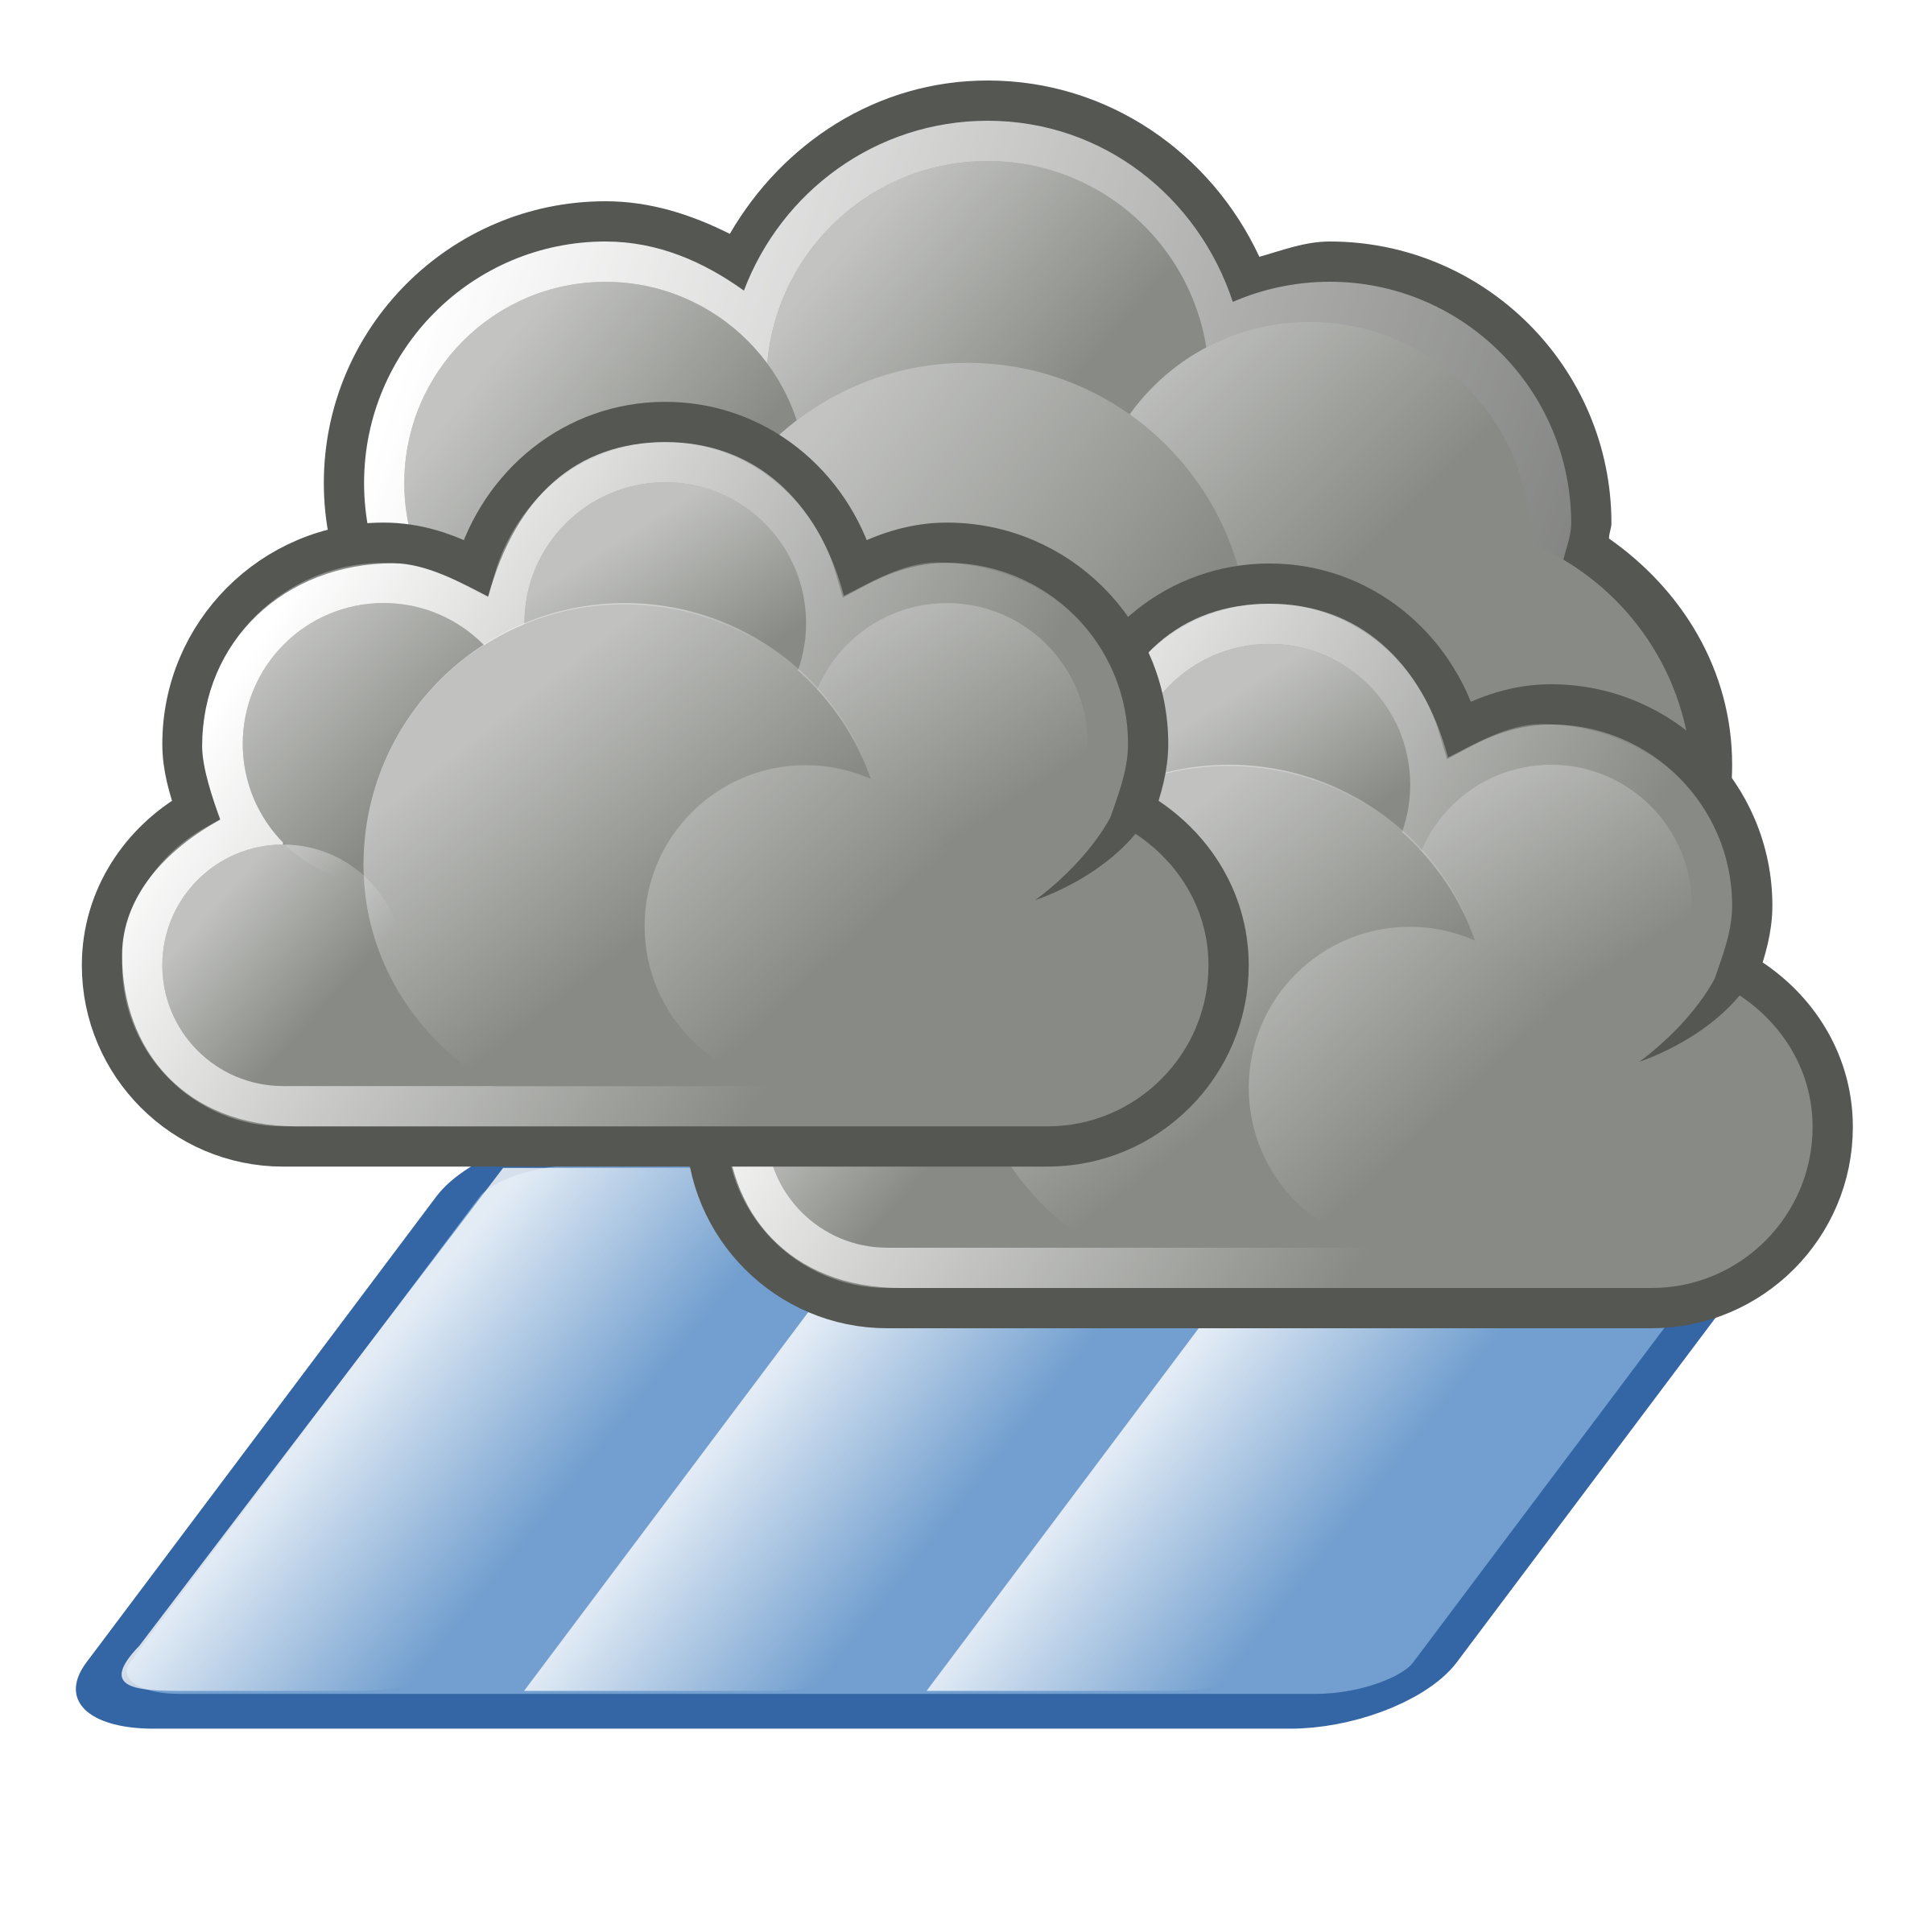 showering clipart cloud